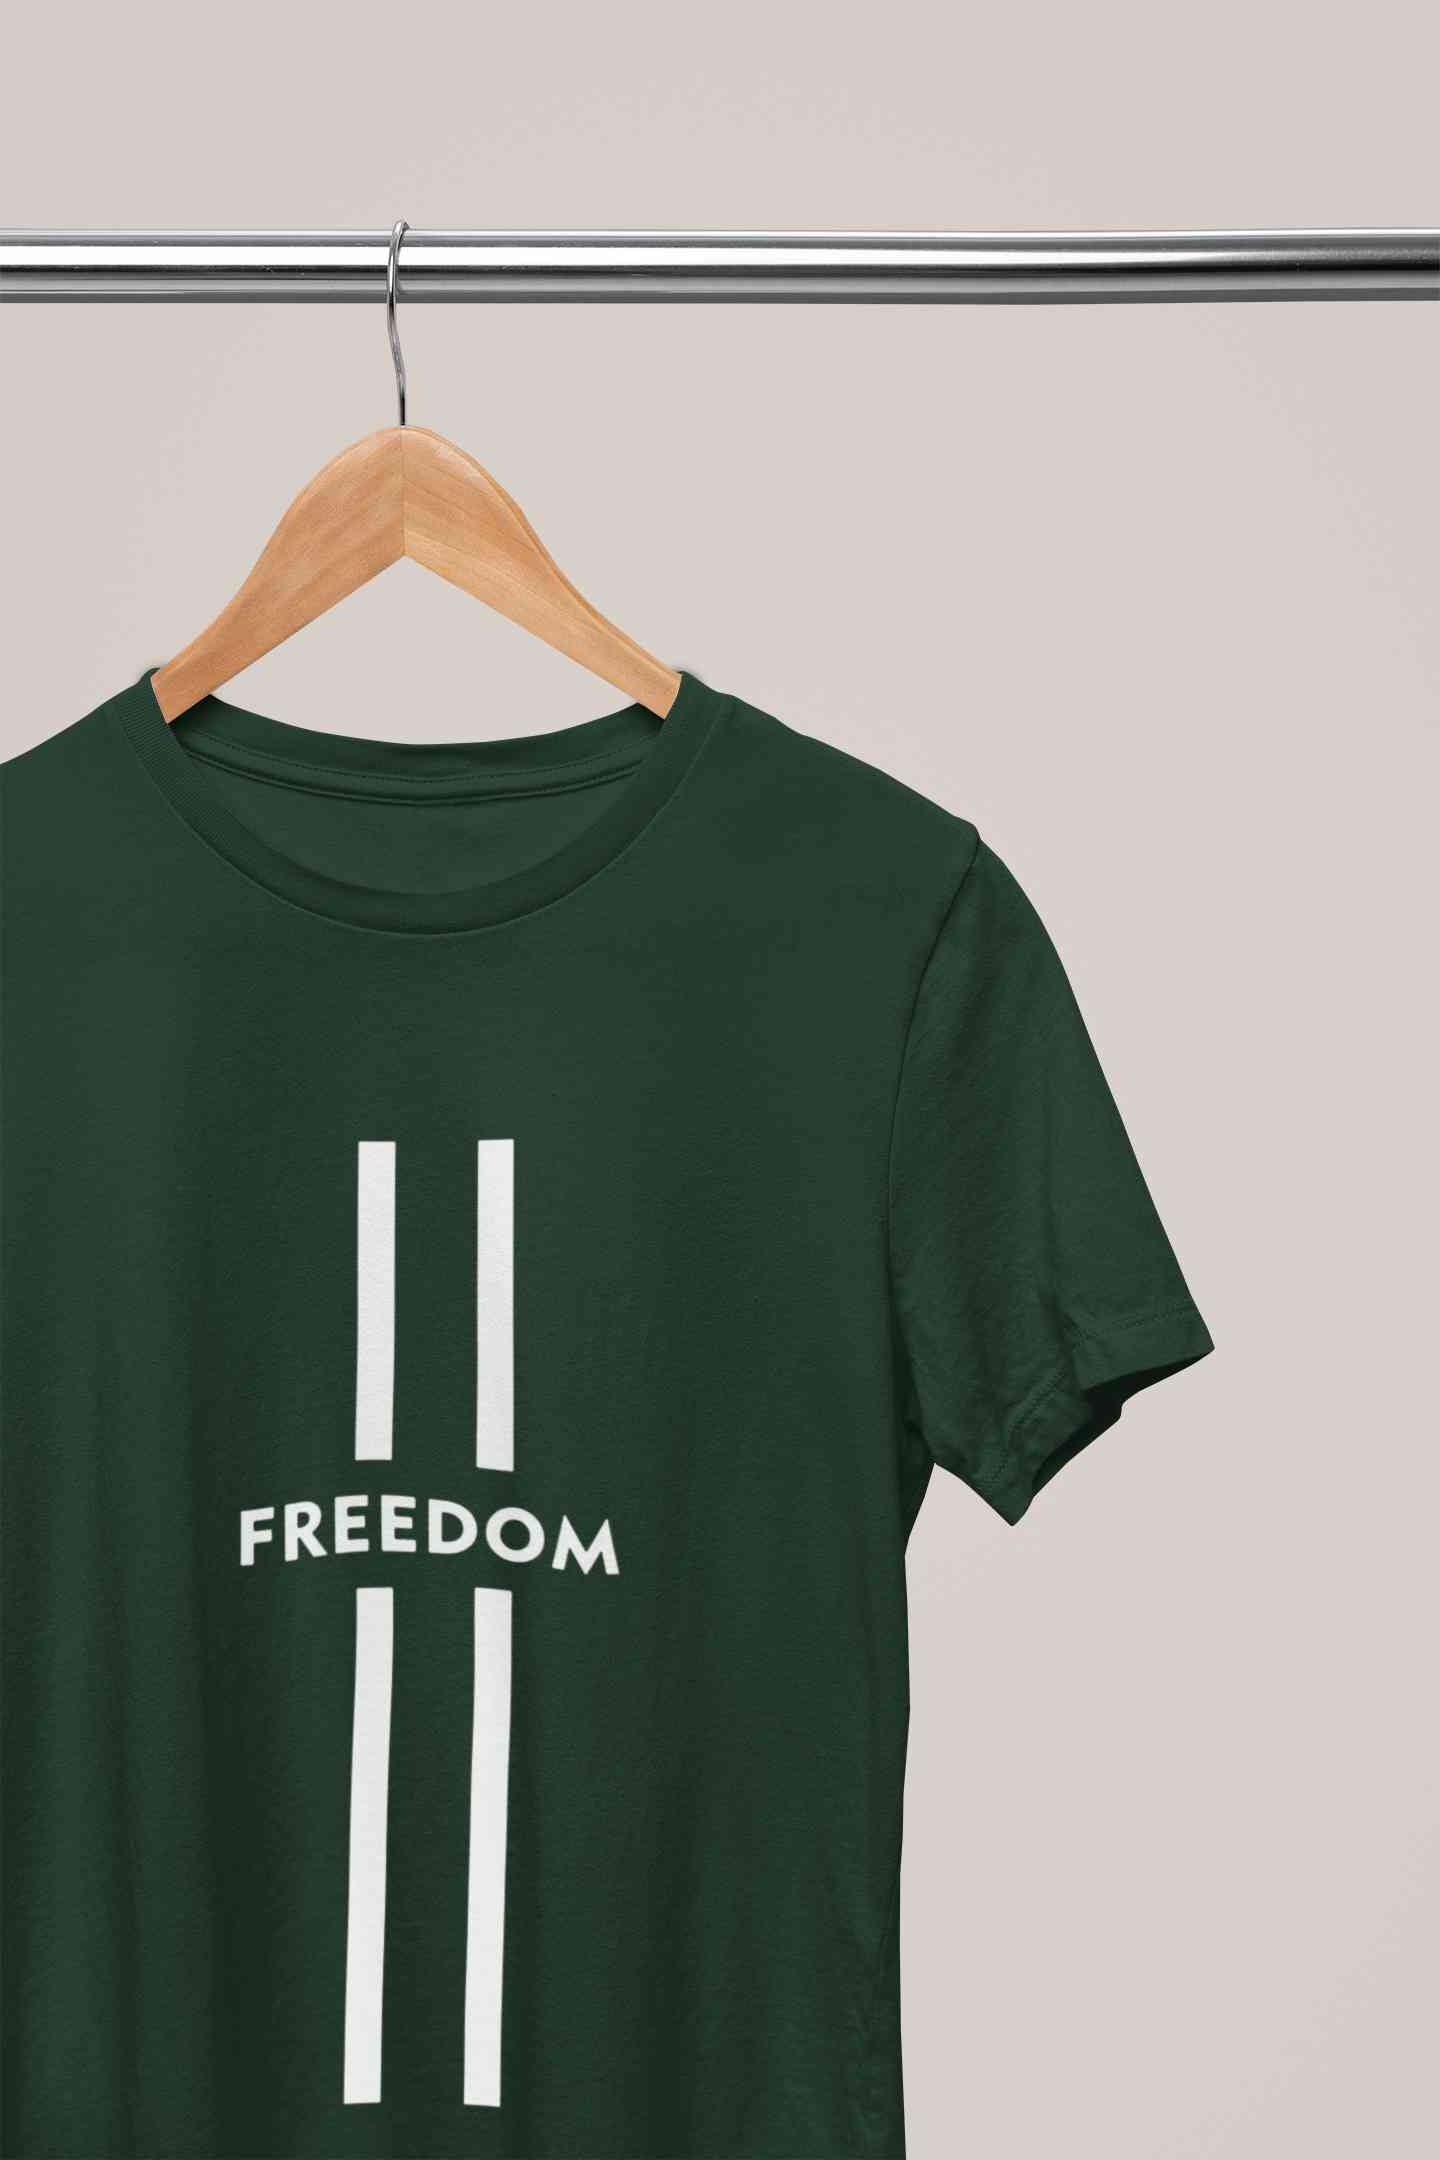 Strip Freedom Women Half Sleeves T-shirt- FunkyTeesClub